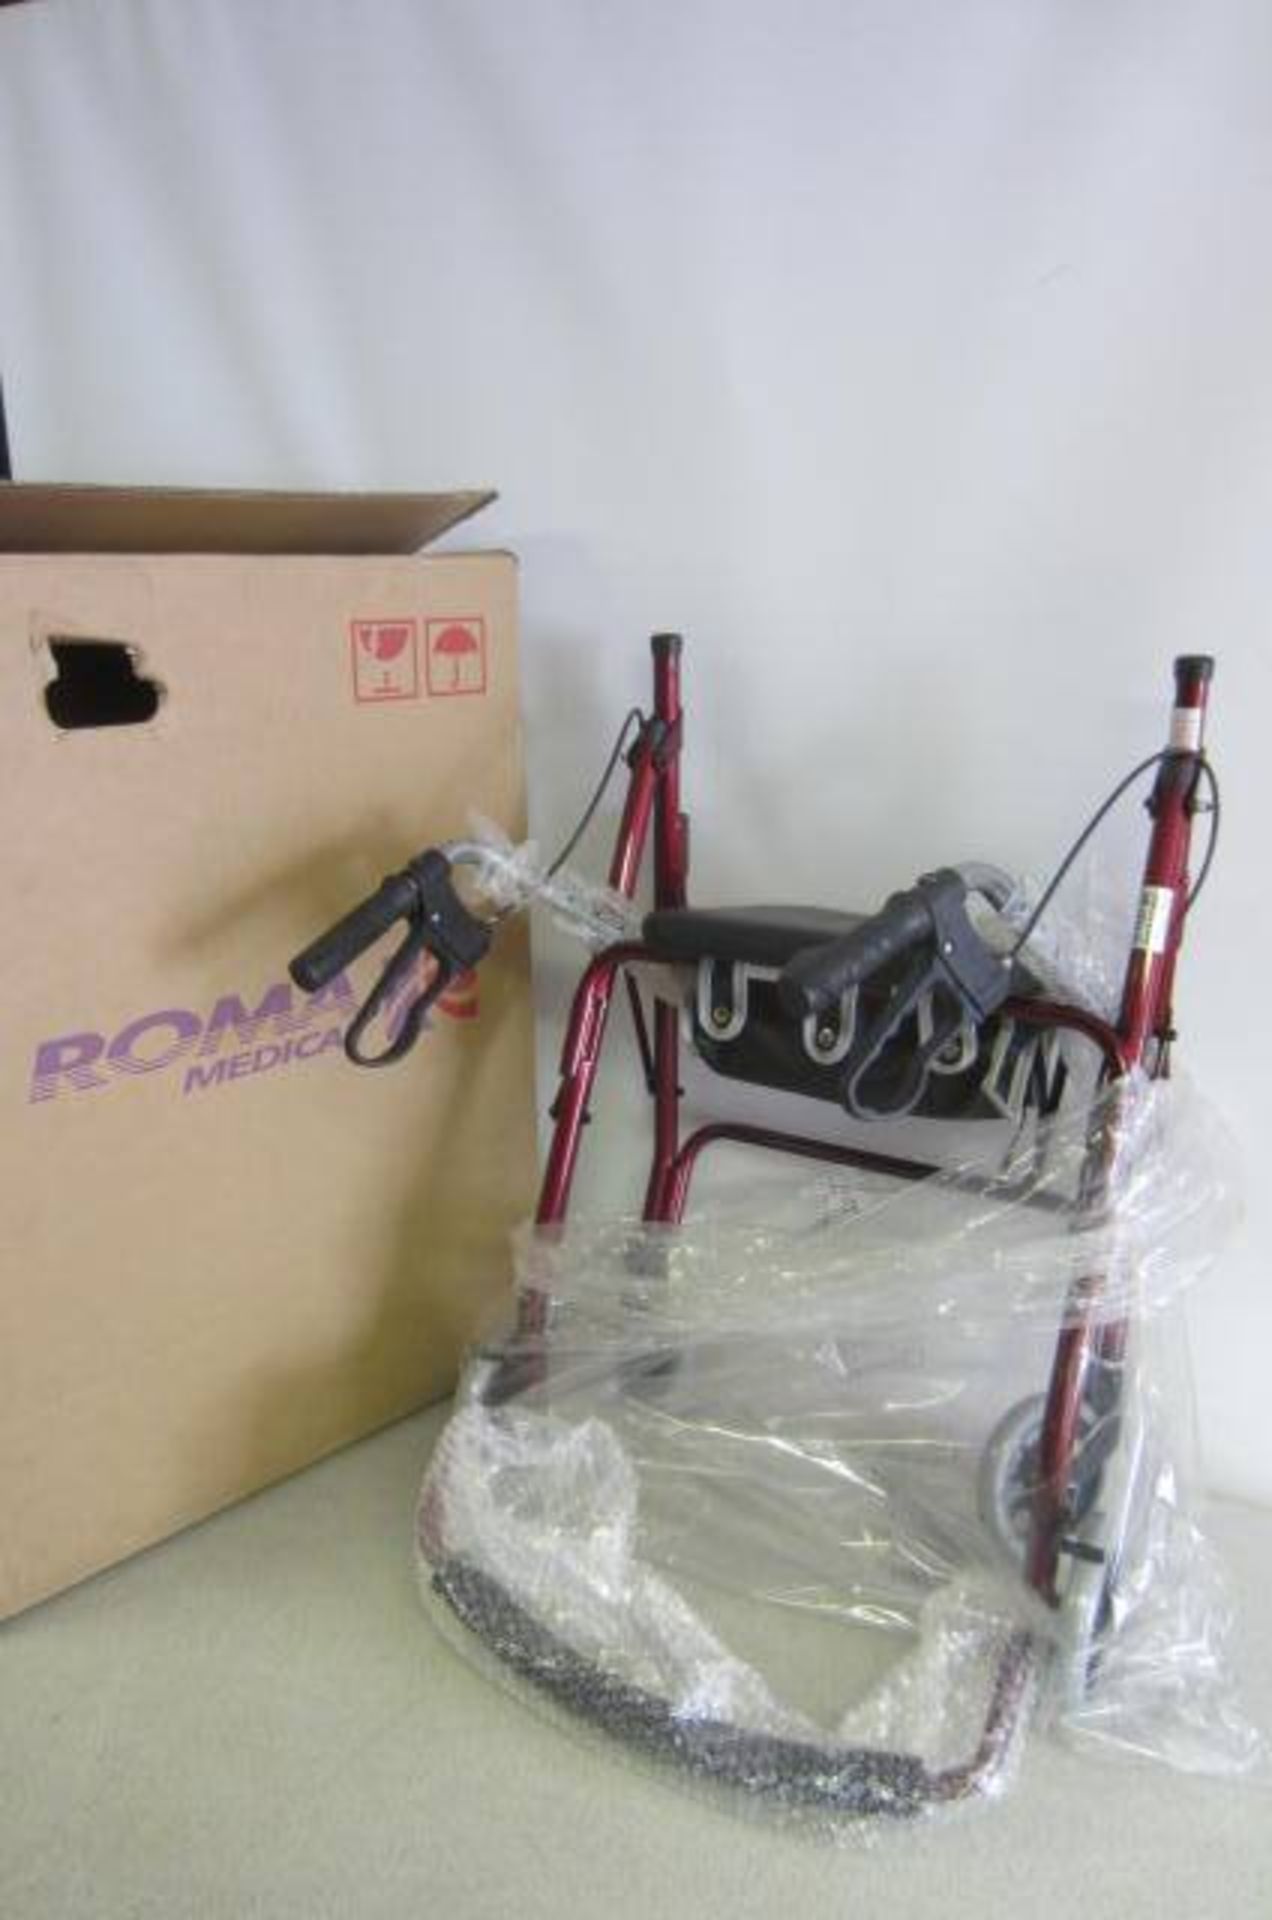 Roma Medical Lightweight 4 Wheel Rollator, Model 2462. Padded Seat & Shopping